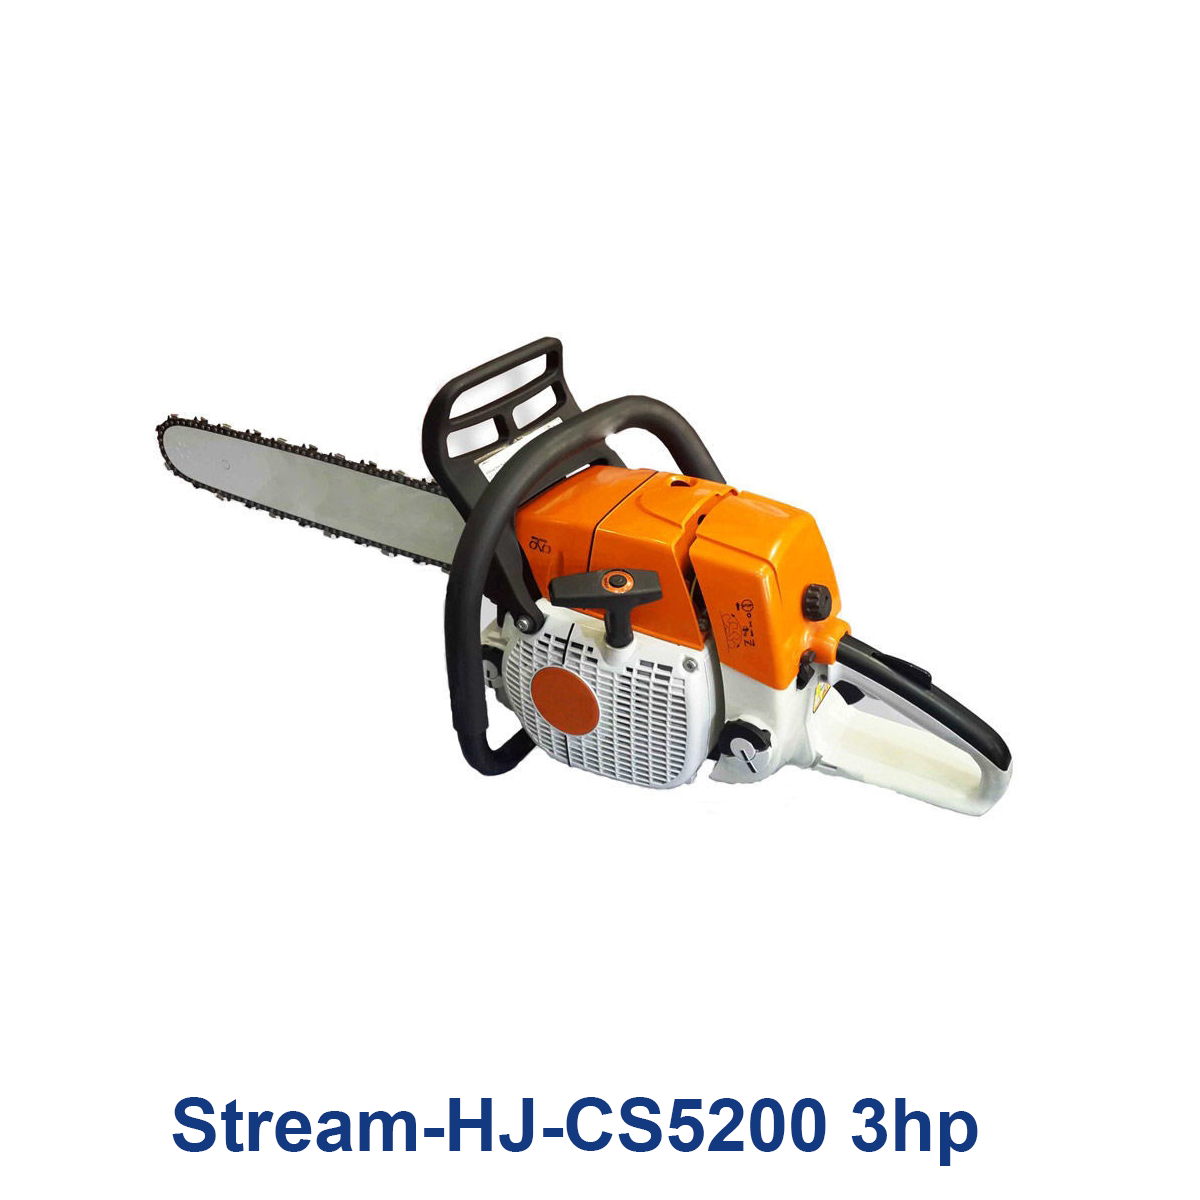 Stream-HJ-CS5200